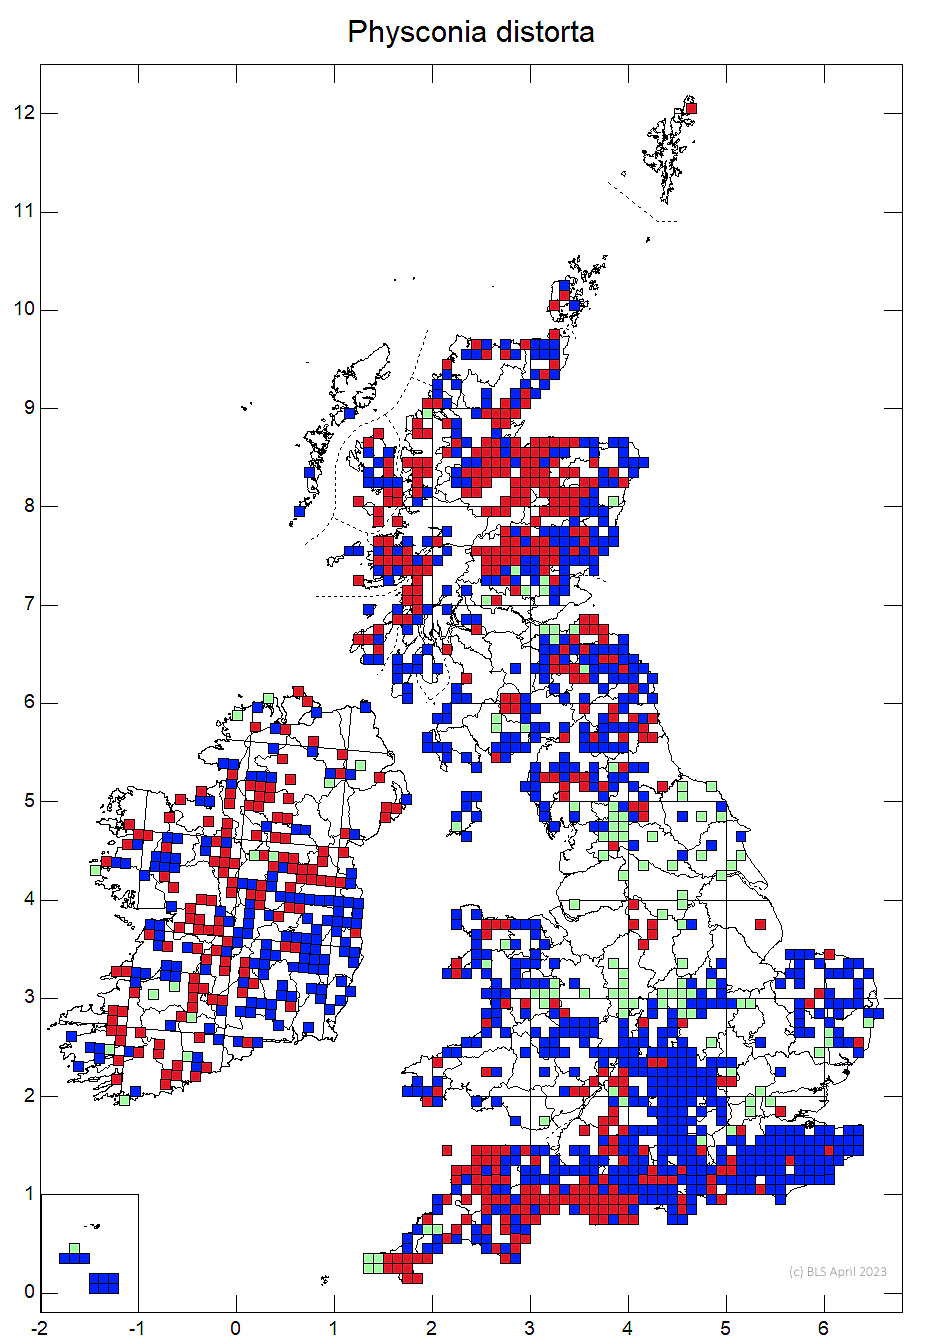 Physconia distorta 10km sq distribution map